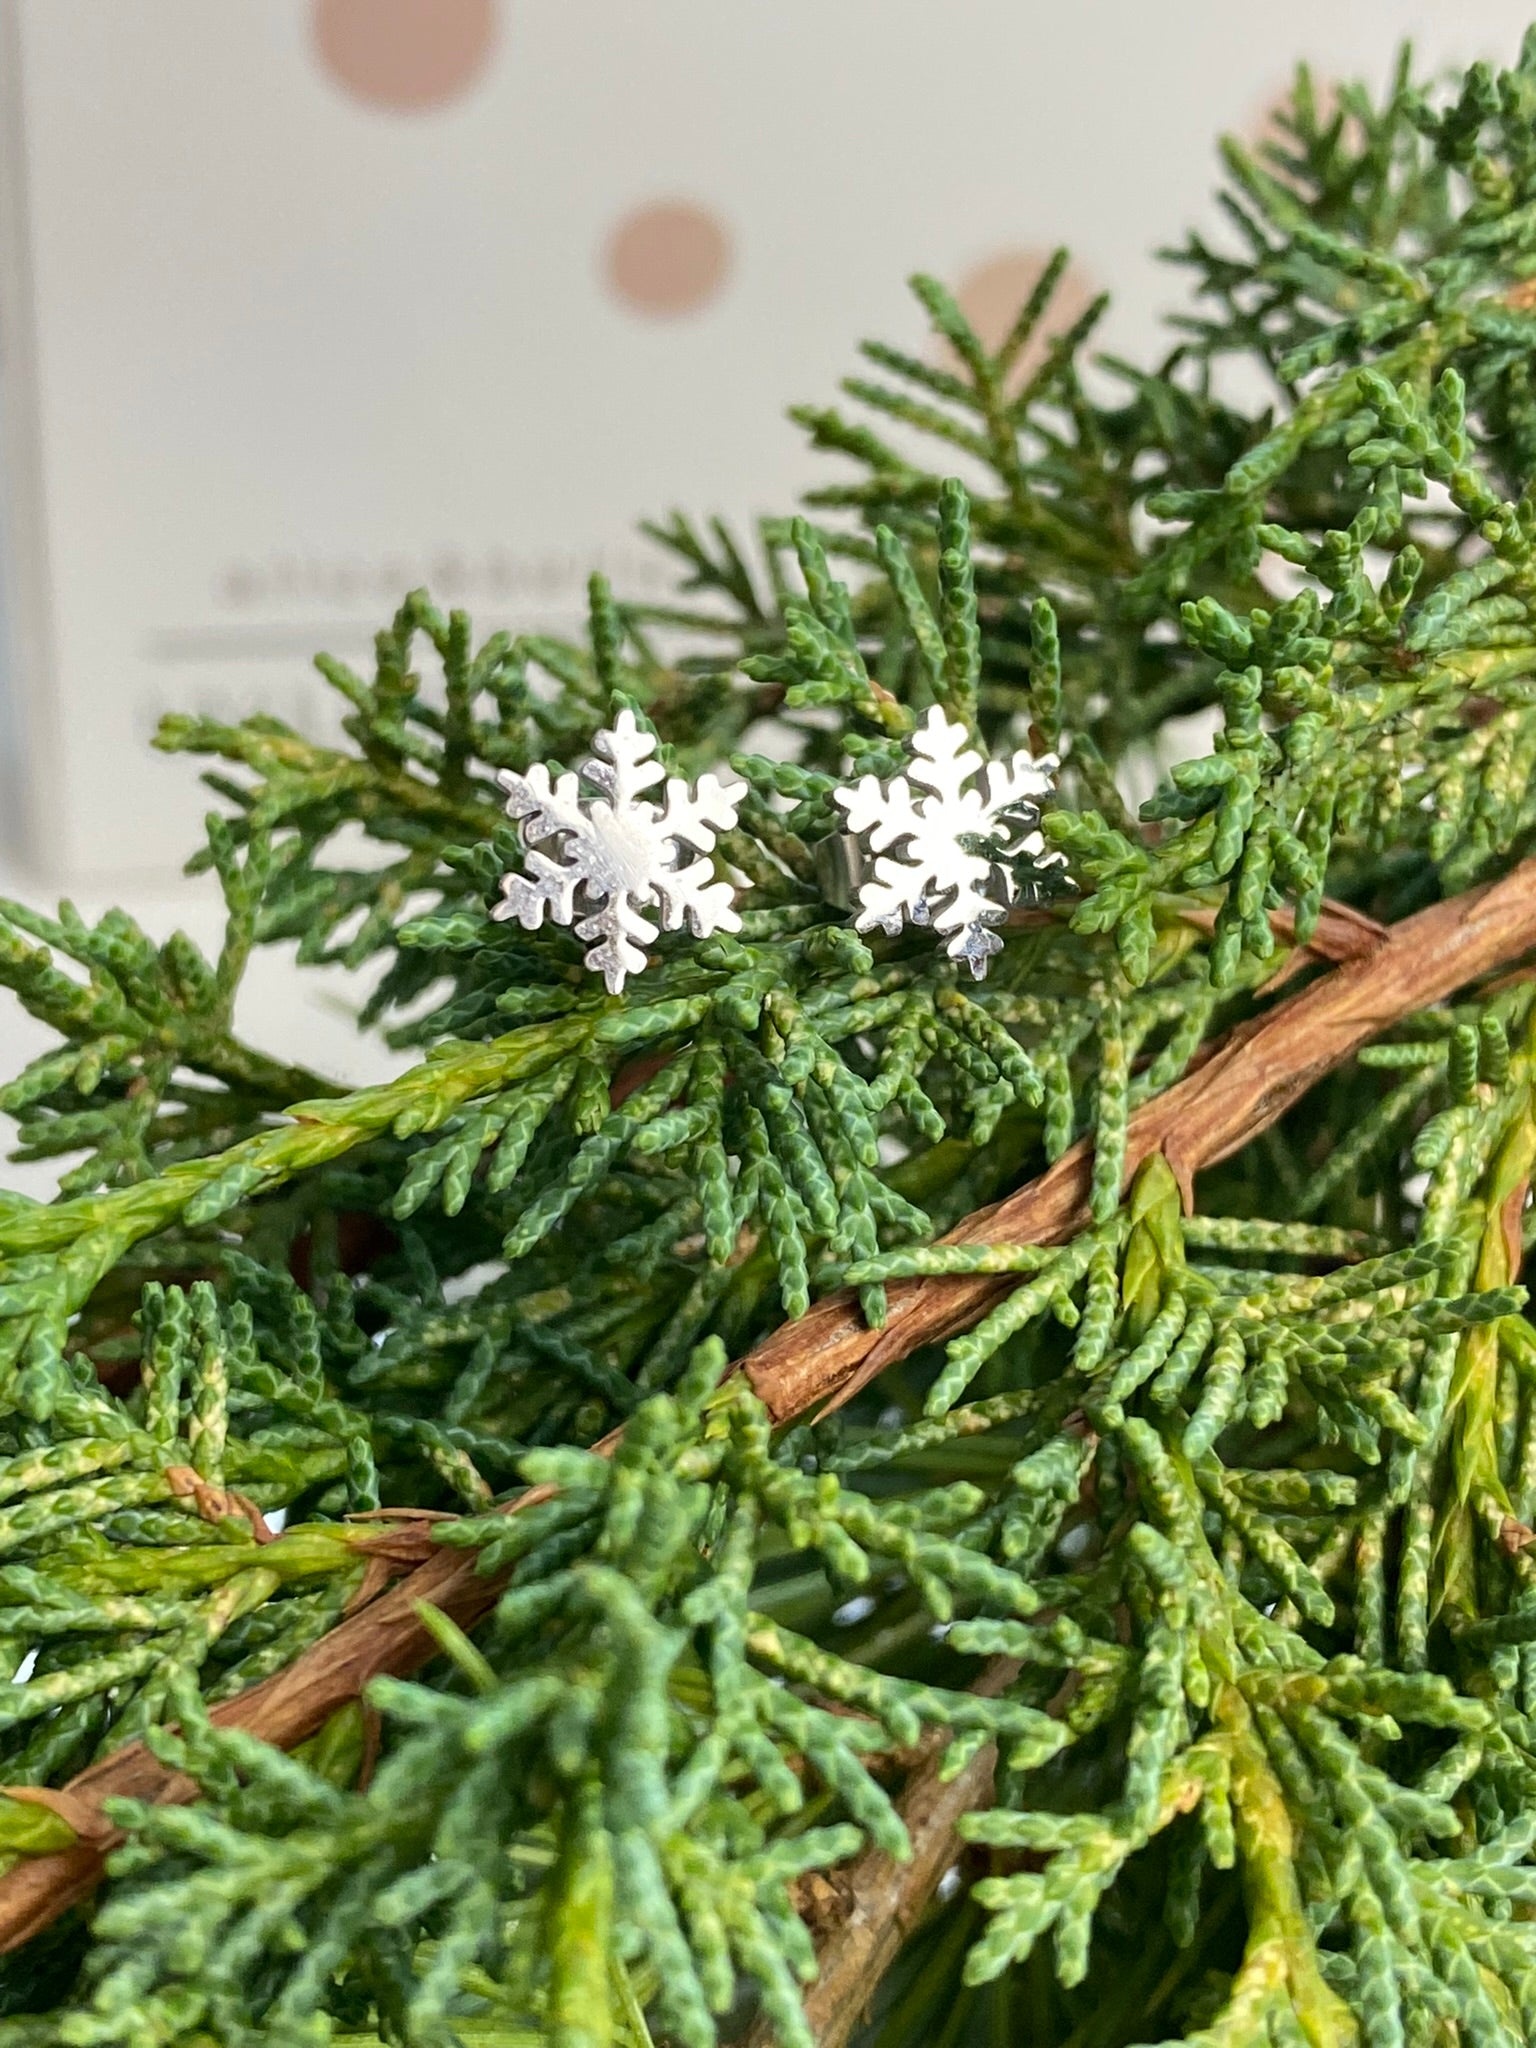 Snowflake Earrings in a Cute Macaroon Box